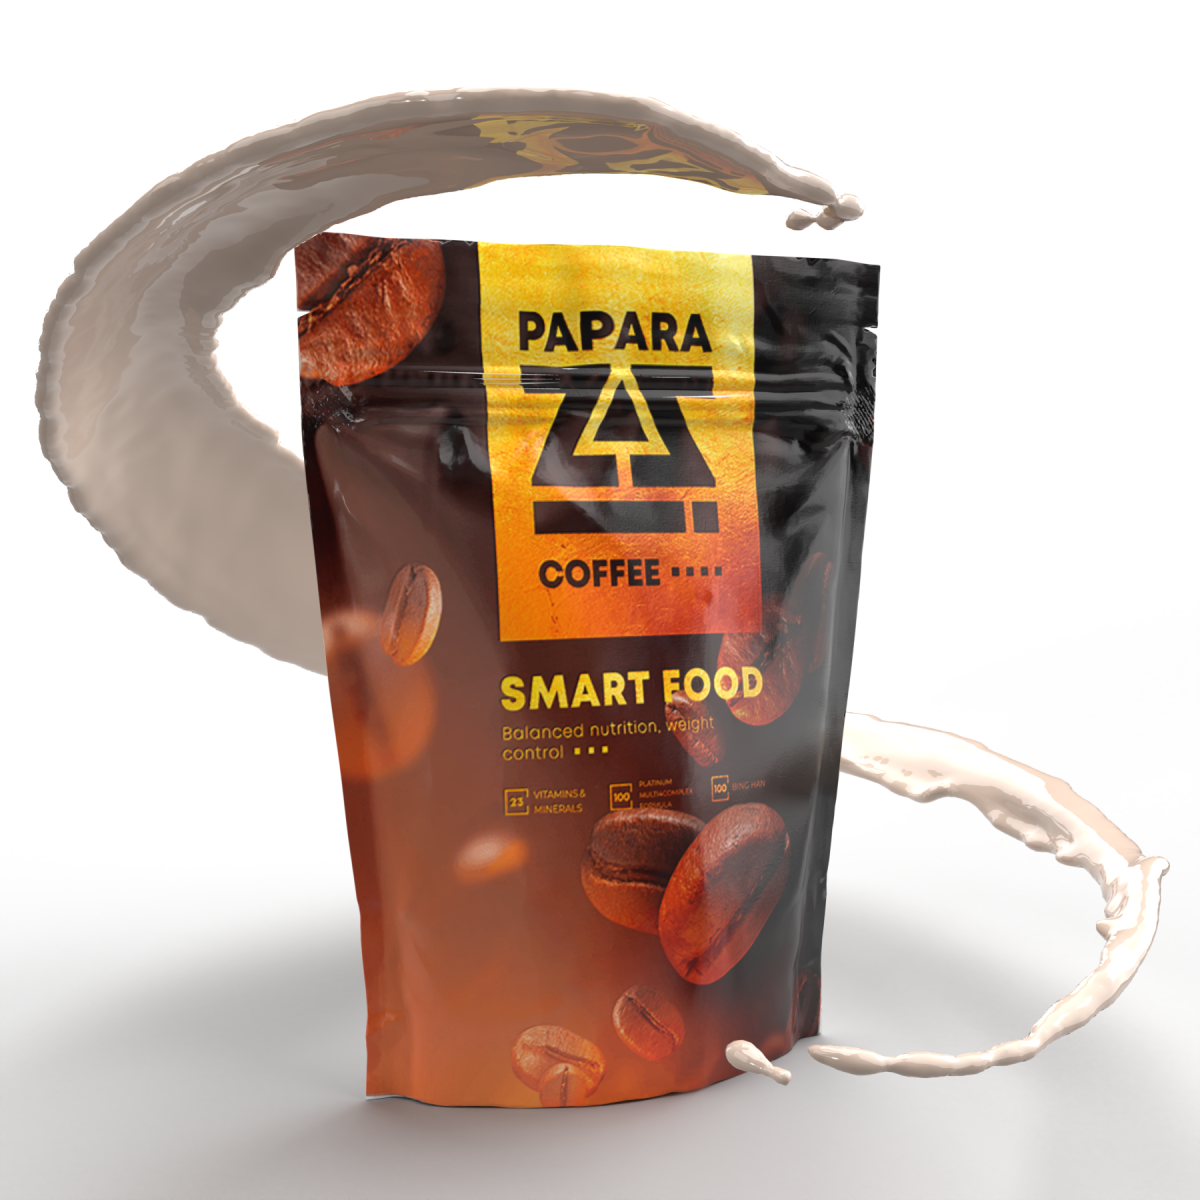 Paparazzi shake - coffee flavor